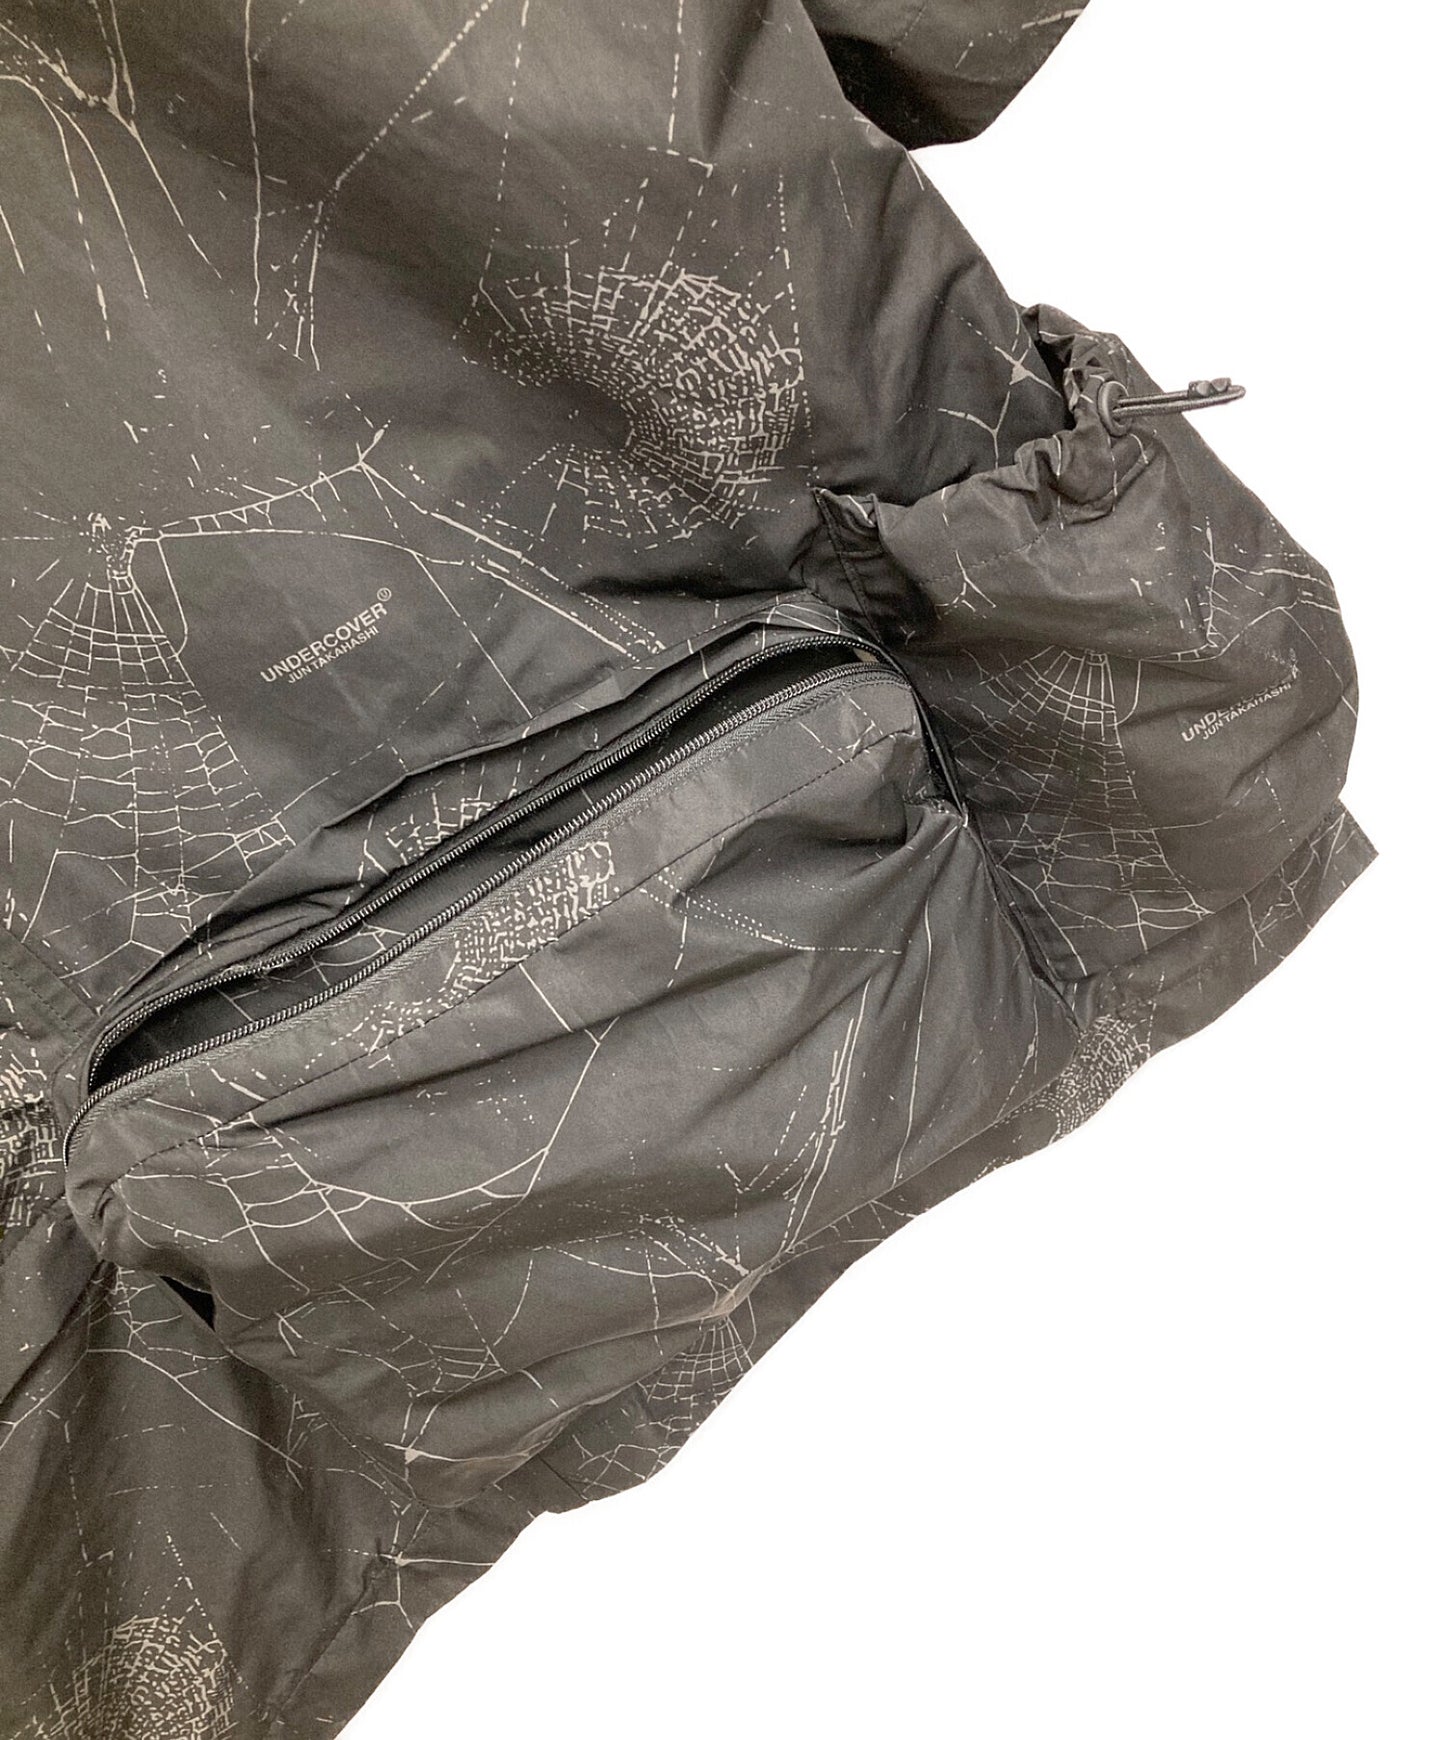 [Pre-owned] UNDERCOVER stenkler coat UCY9301